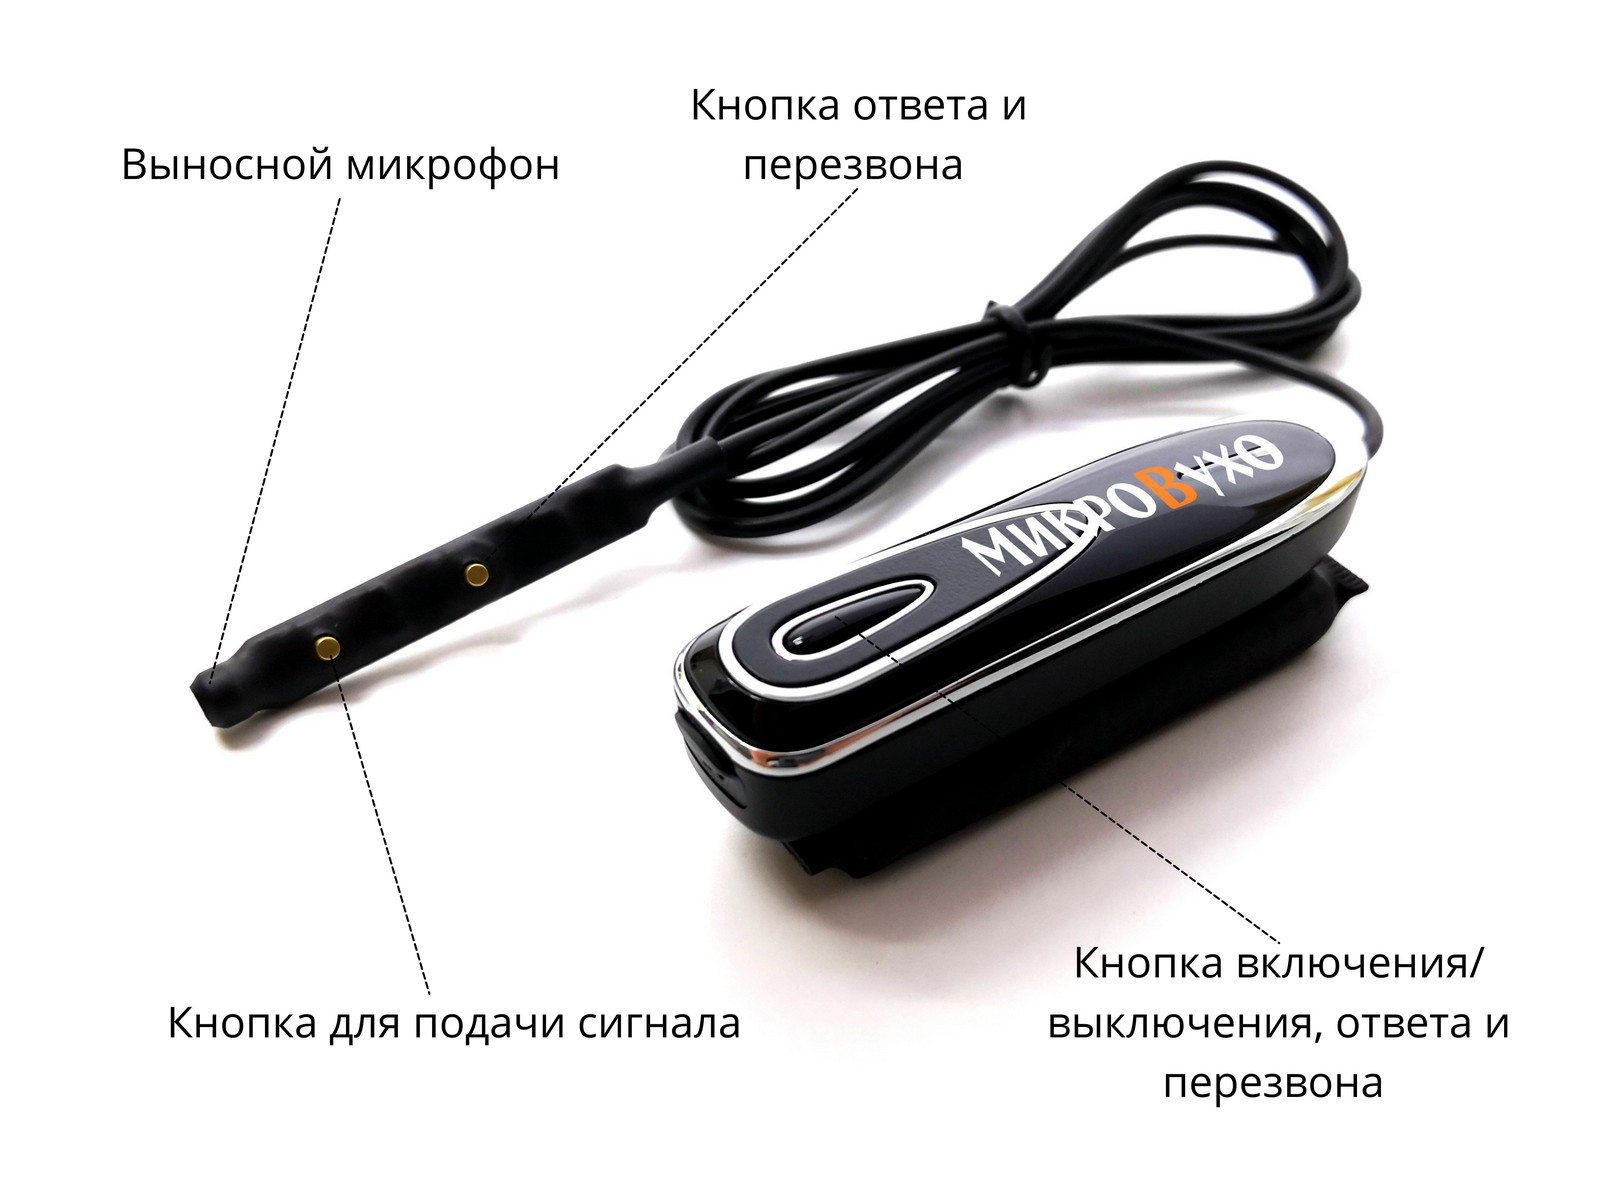 Аренда микронаушника Bluetooth Box Premier Plus с капсулой К5 4 мм и магнитами 2 мм 4